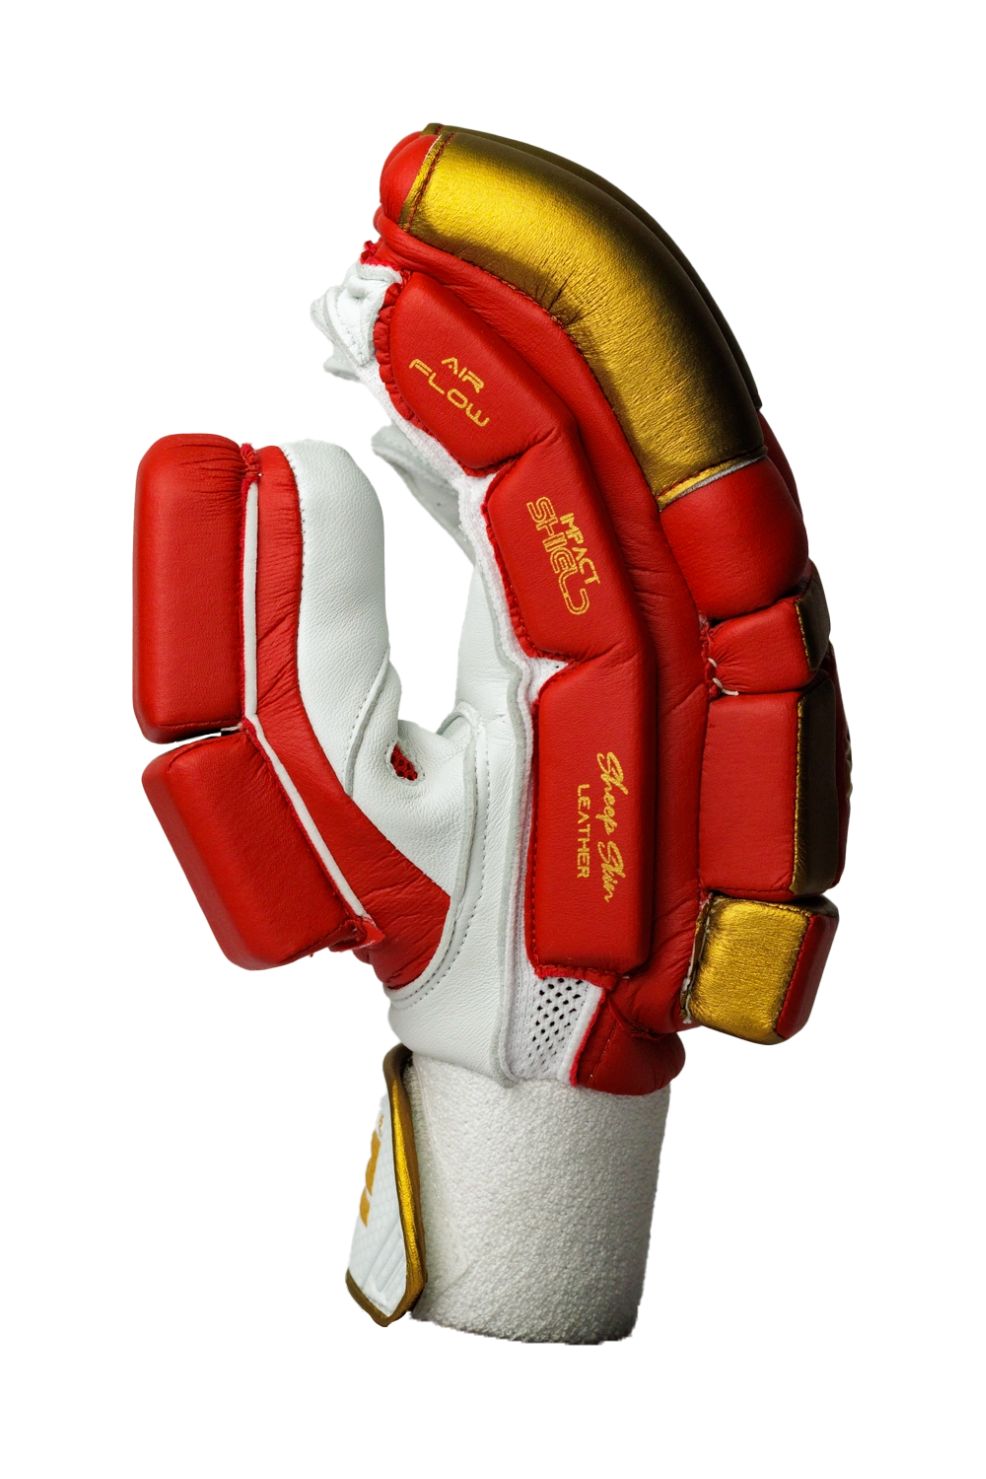 Cricket Batting Gloves - Gold & Red